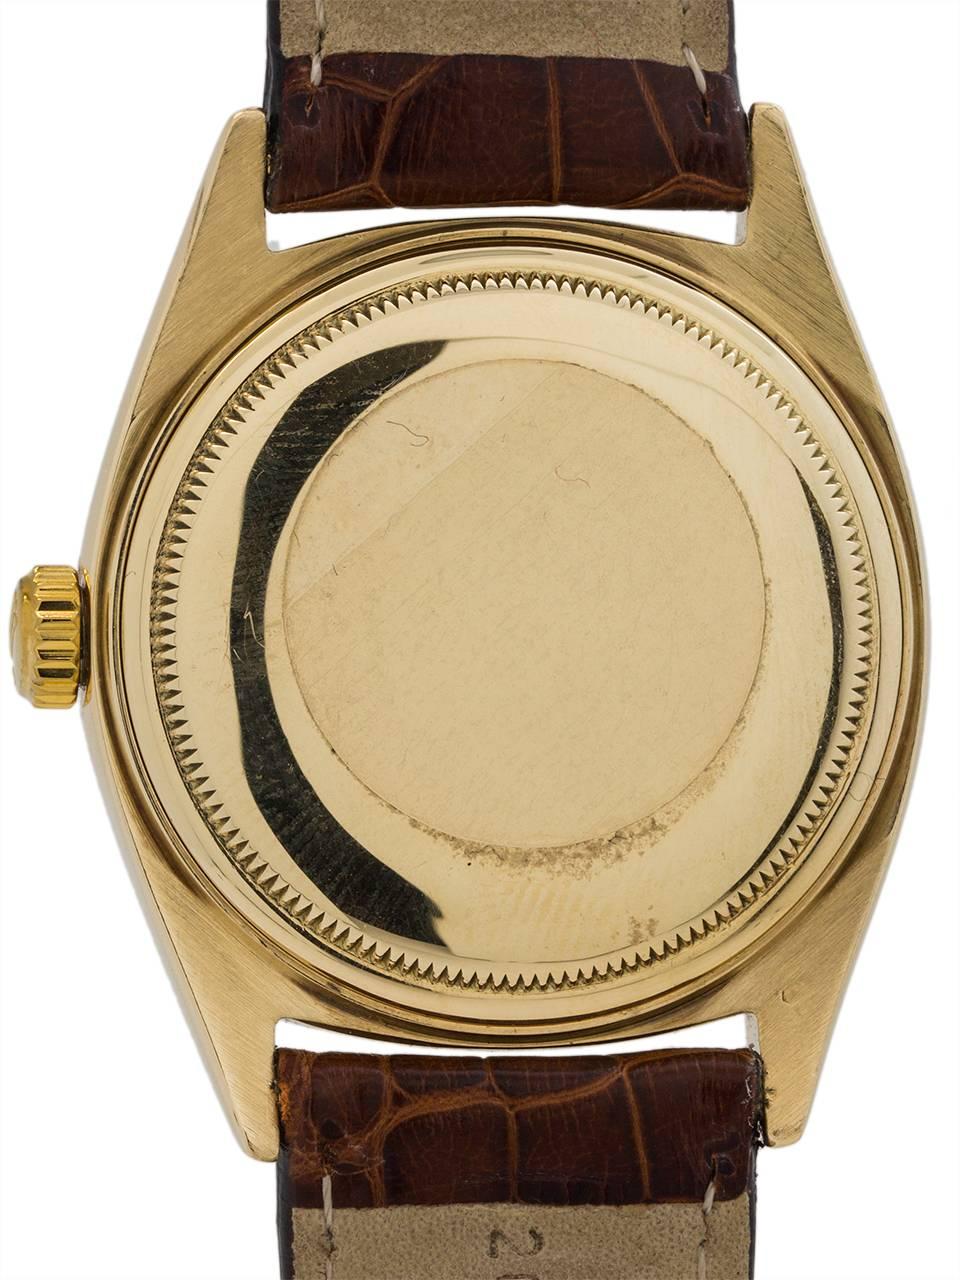 Men's Rolex Yellow Gold Datejust Self Winding Wristwatch Ref 1601, circa 1962